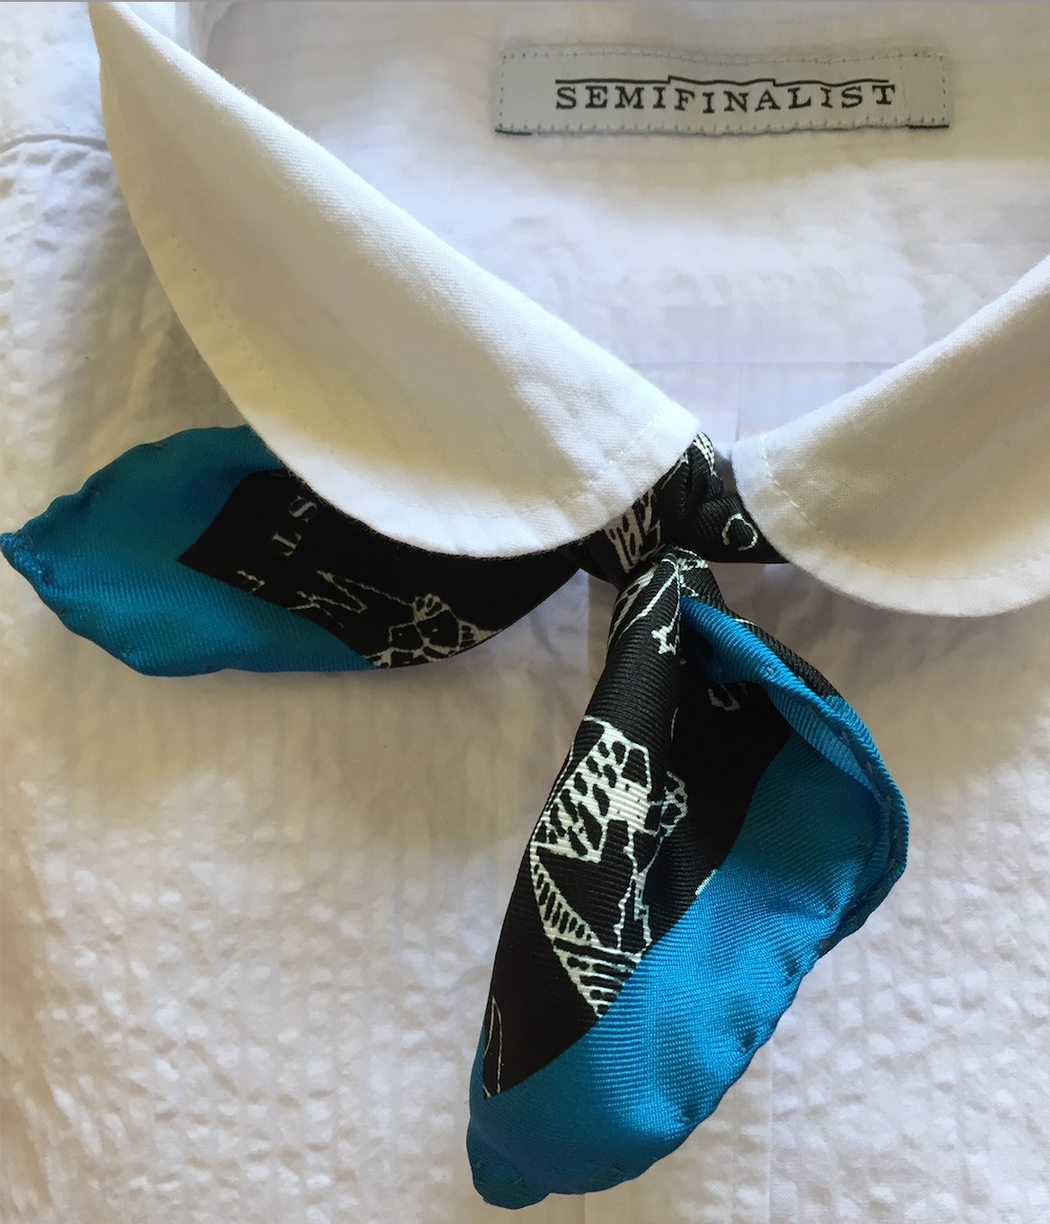 Black & white silk pocket square scarf with blue border, tied around Semifinalist blouse collar